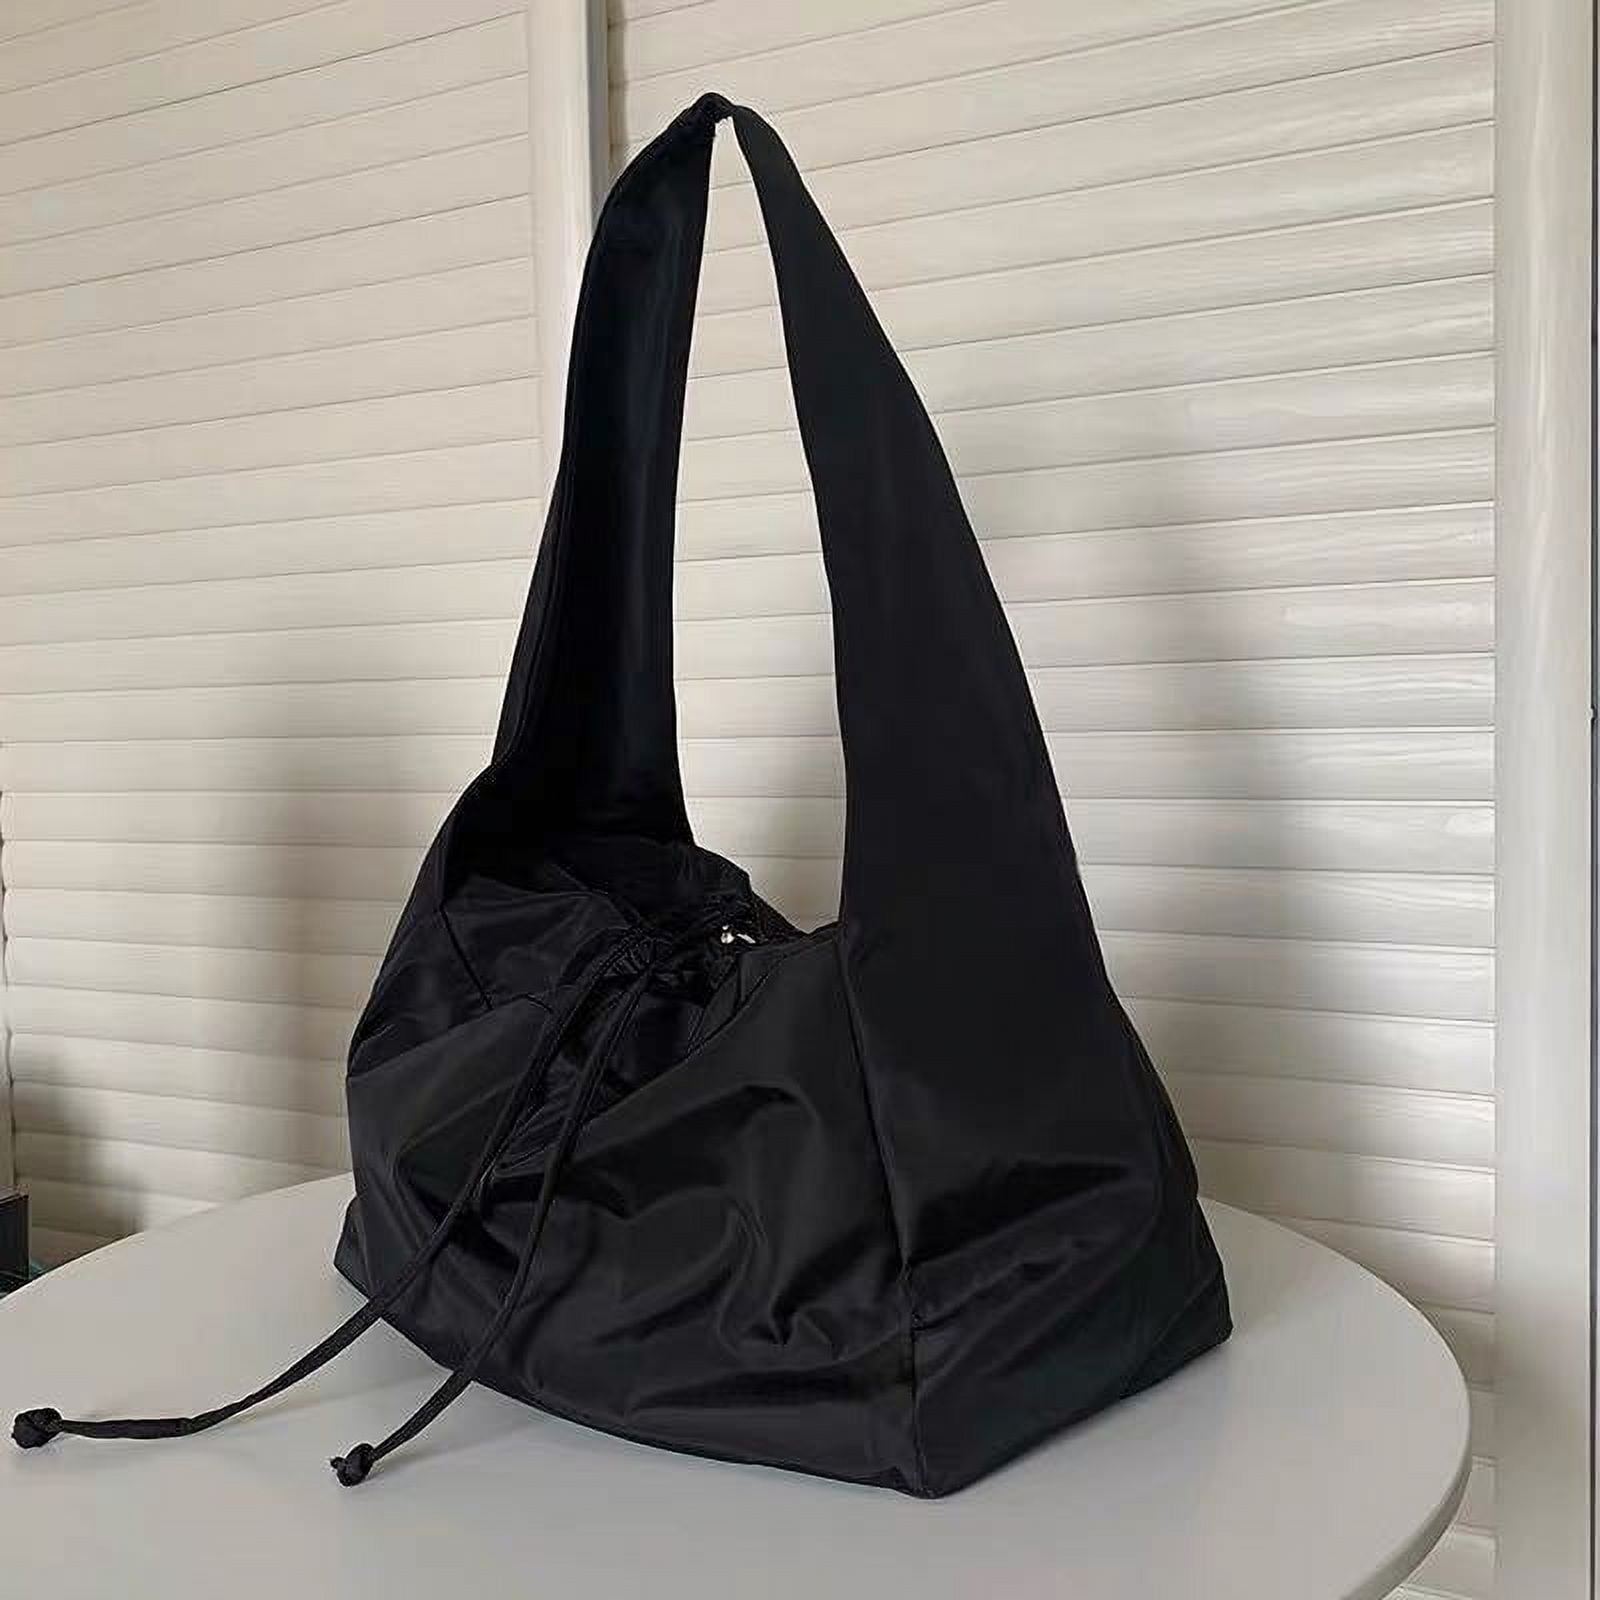 Cocopeaunt Handbags for Women Bags Female Messenger Bag Large Capacity Shoulder Bags Simplicity Tote Bag Bucket Bag Shopper Bag Sac A Main, Adult